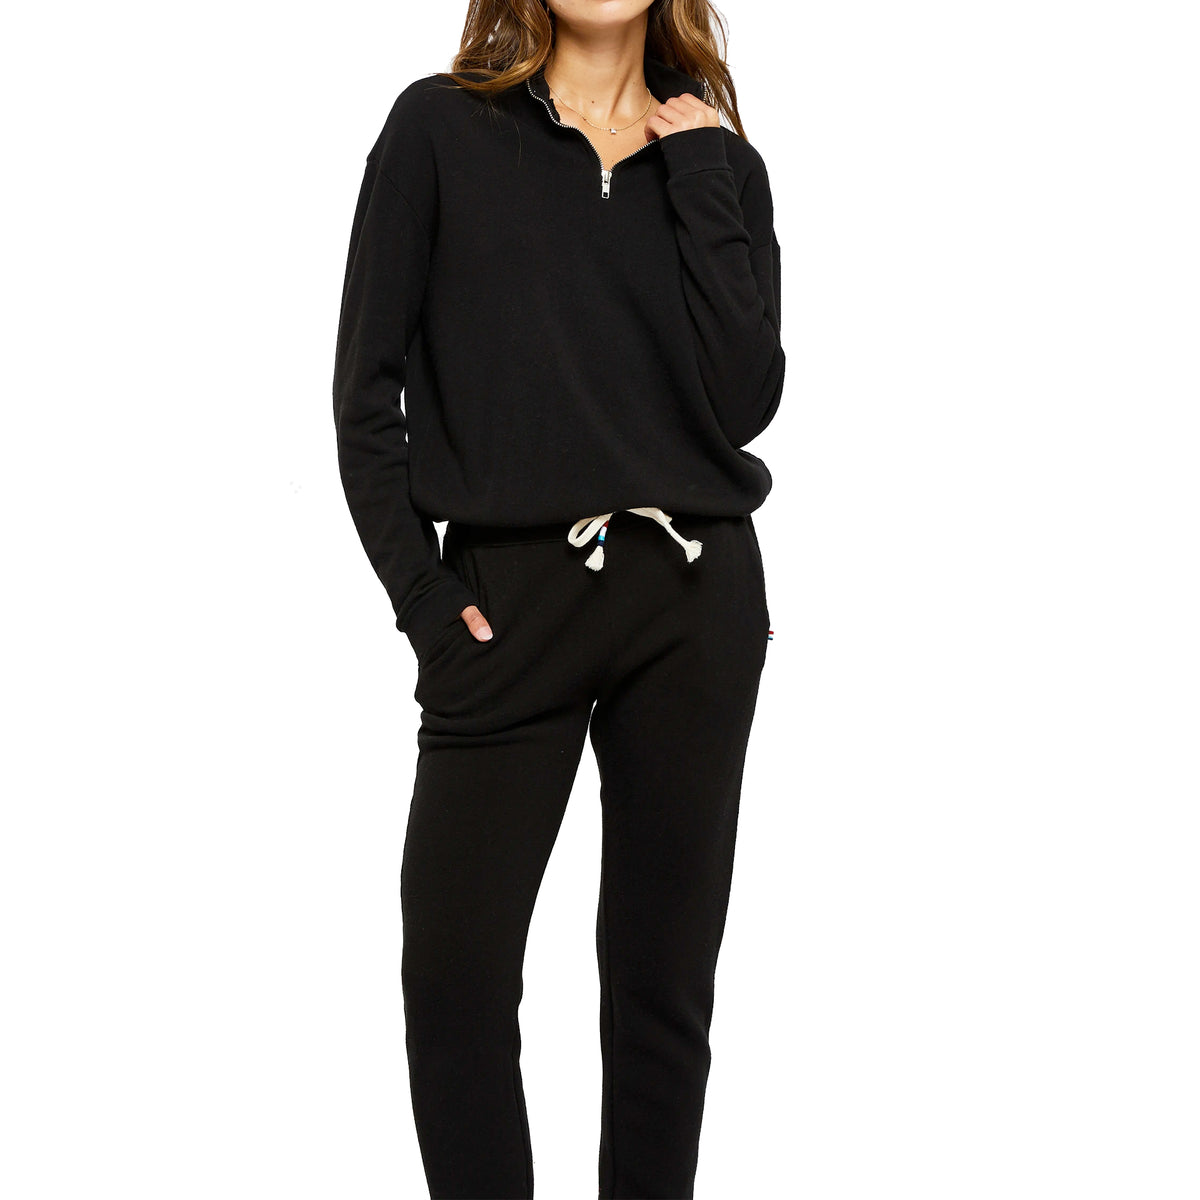 Zip Neck Pullover Sweats Set, RSVP Style - RSVP Style